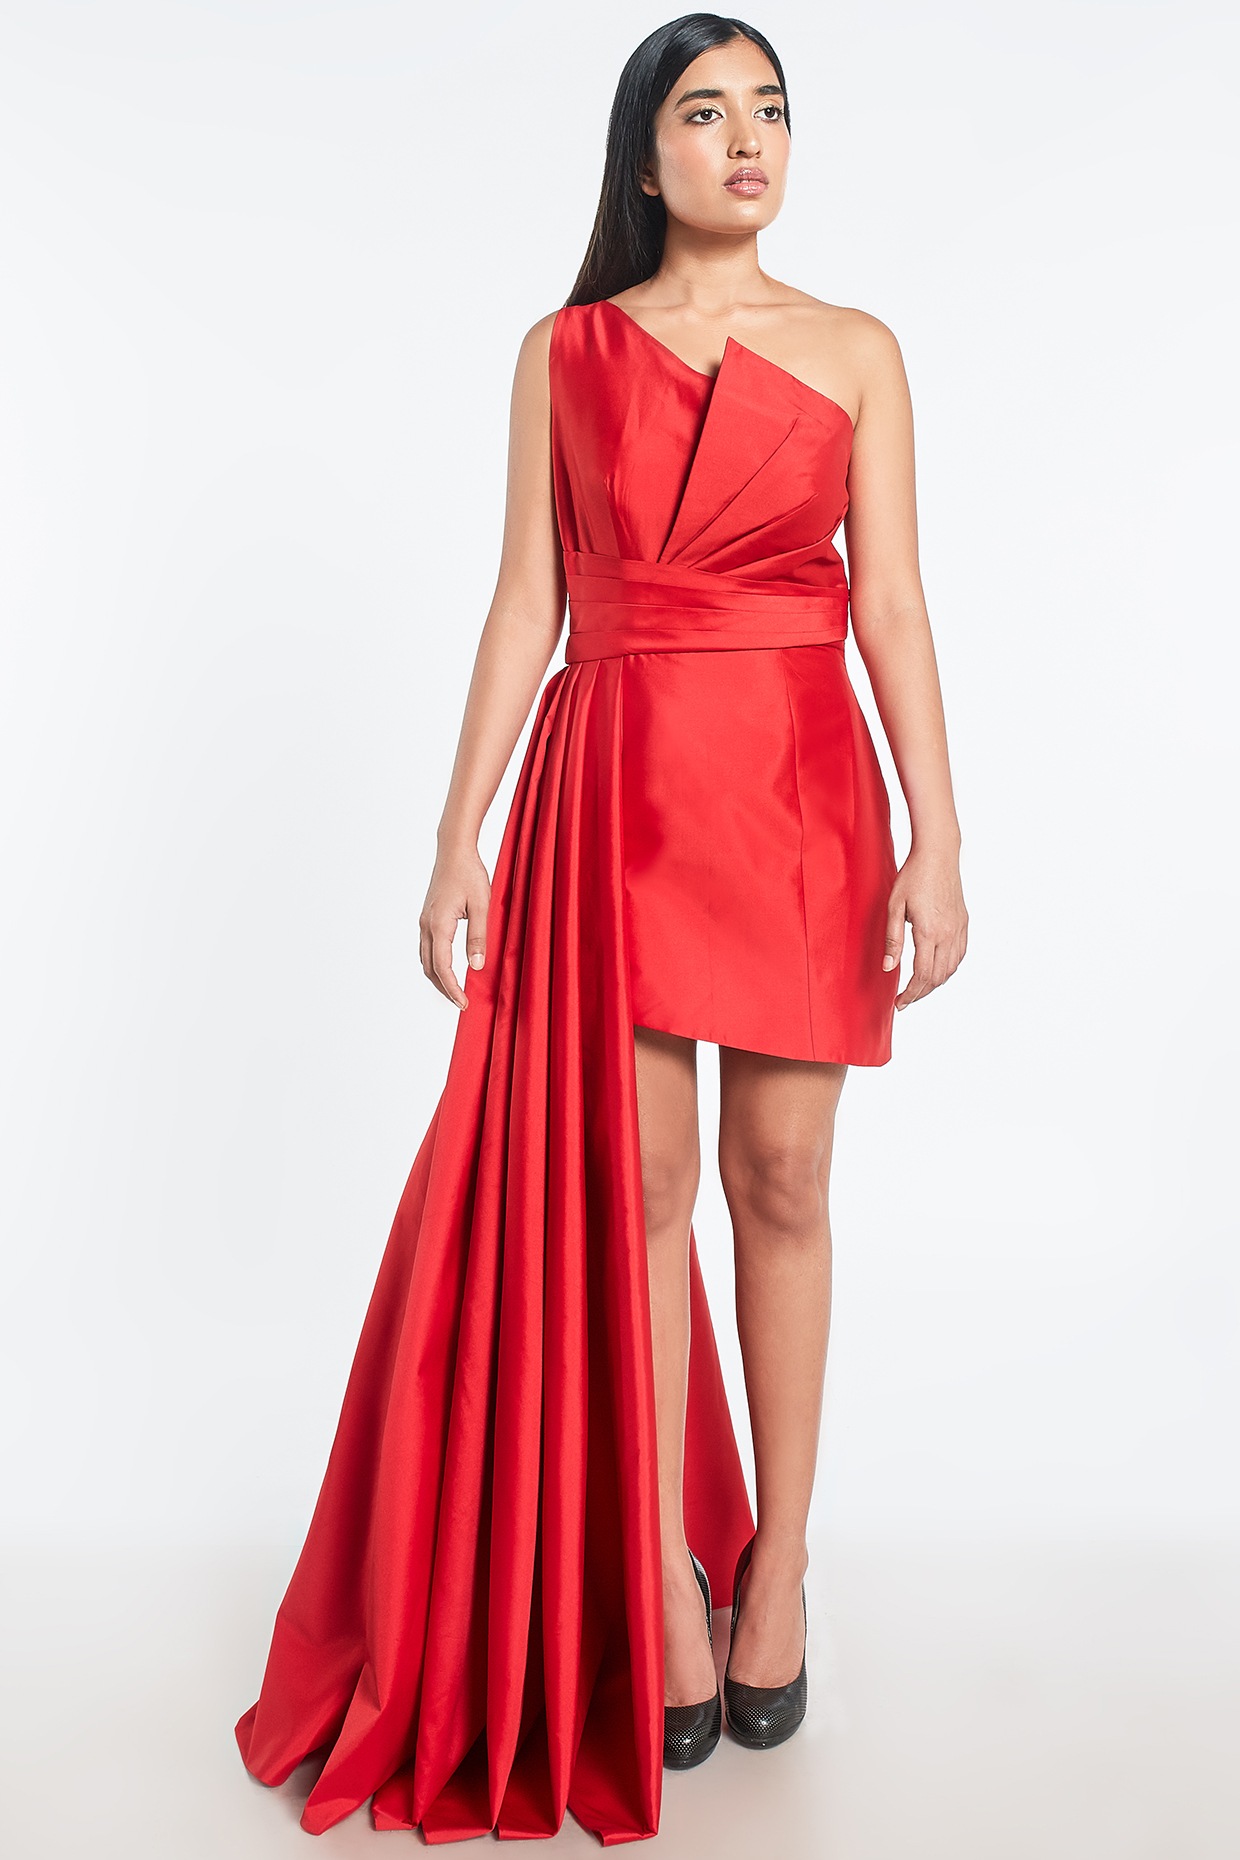 Red Mini Dress With Side Drape Design ...